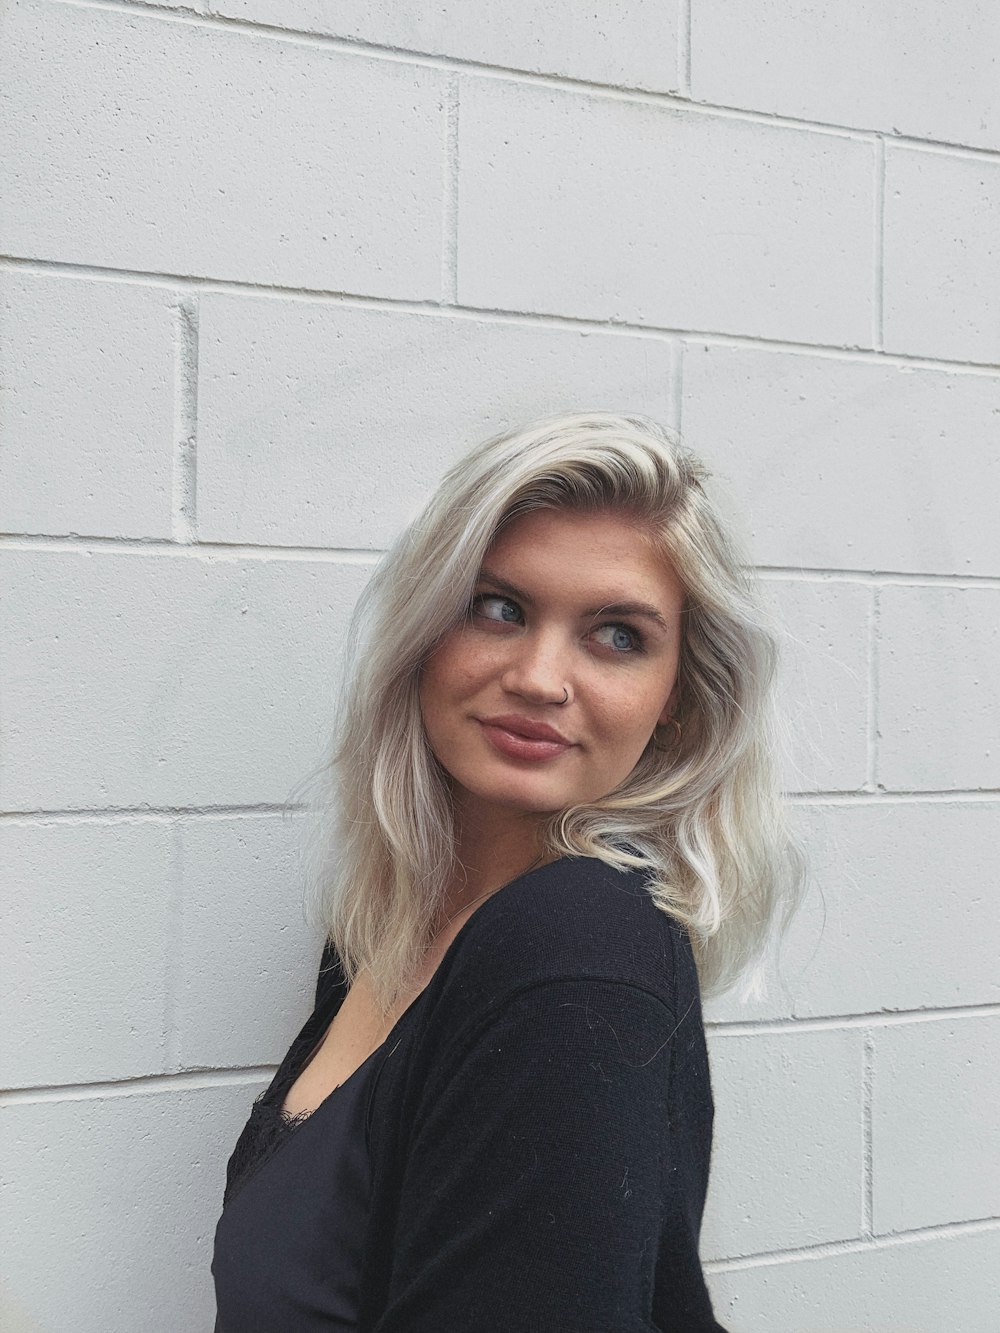 woman wearing black top standing beside white wall